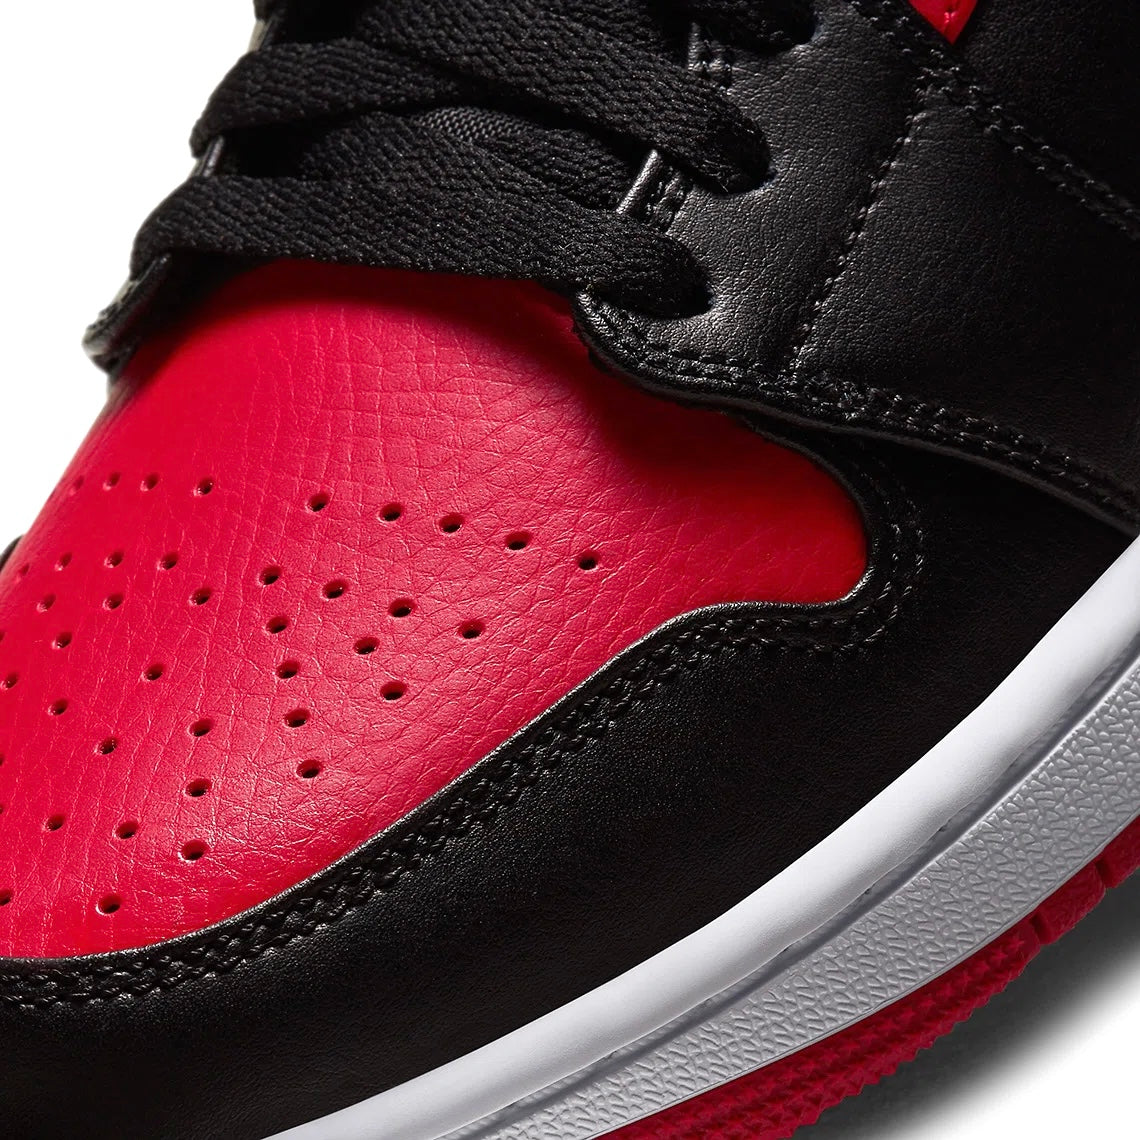 Air Jordan 1 Mid Banned Black University Red